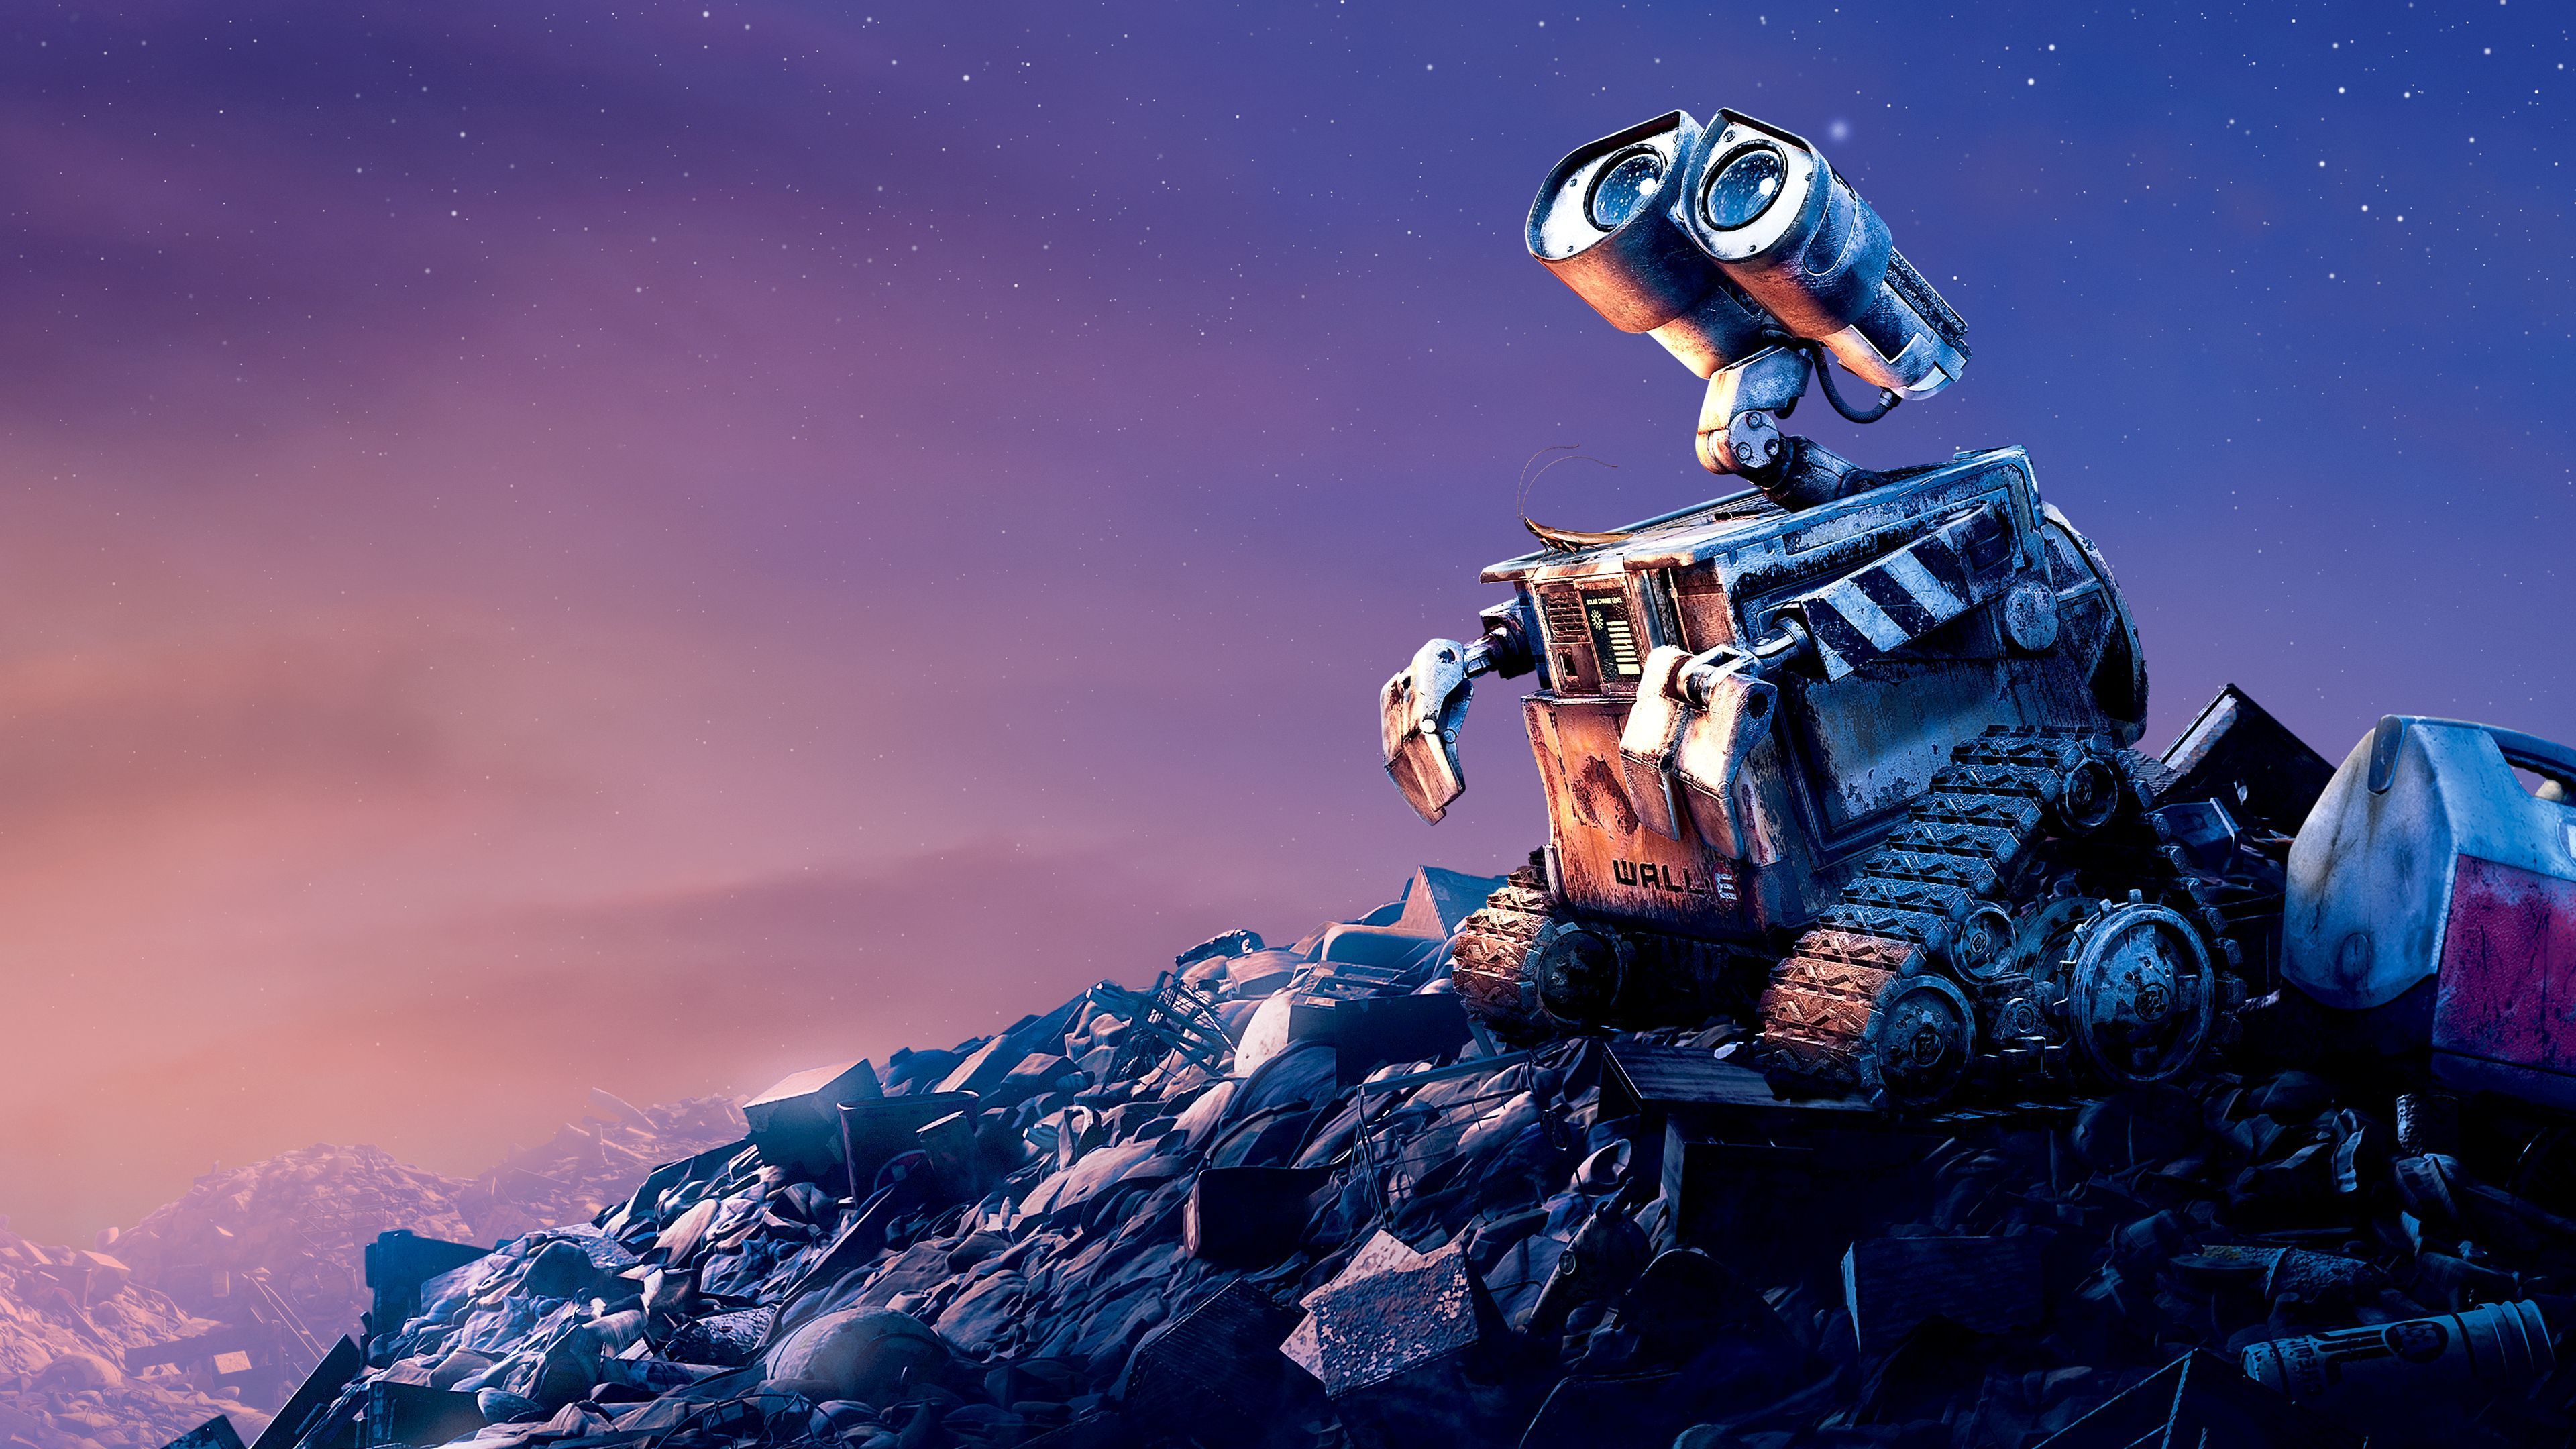 As 5 curiosidades sobre os sons de 'Wall-E', da Disney e Pixar